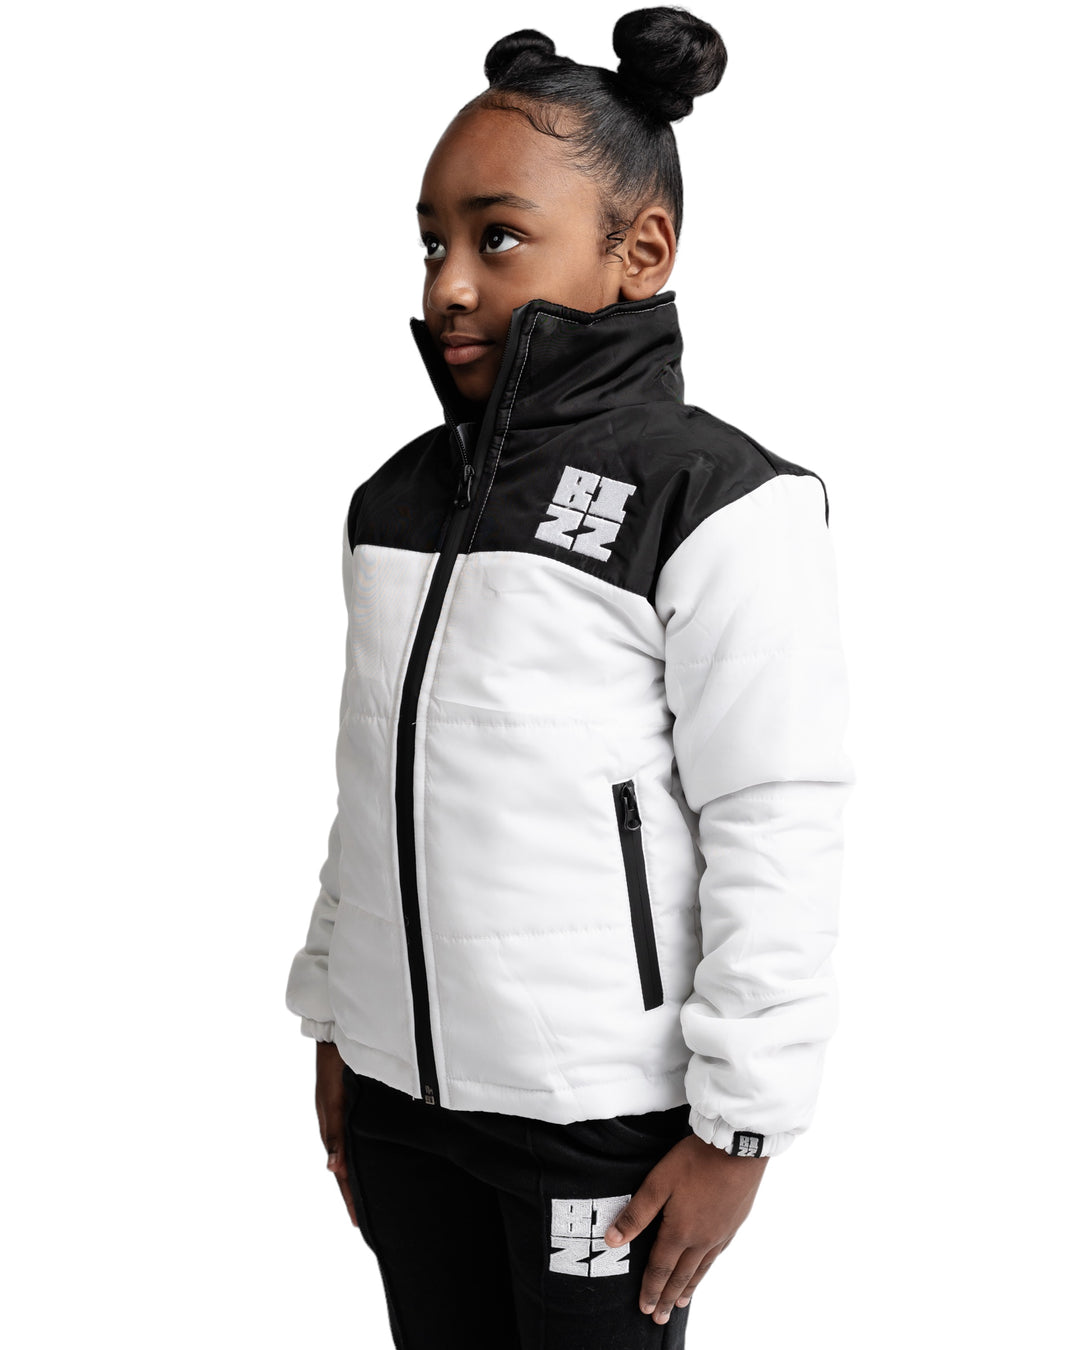 Kid Club Puffer Jacket in White/Black